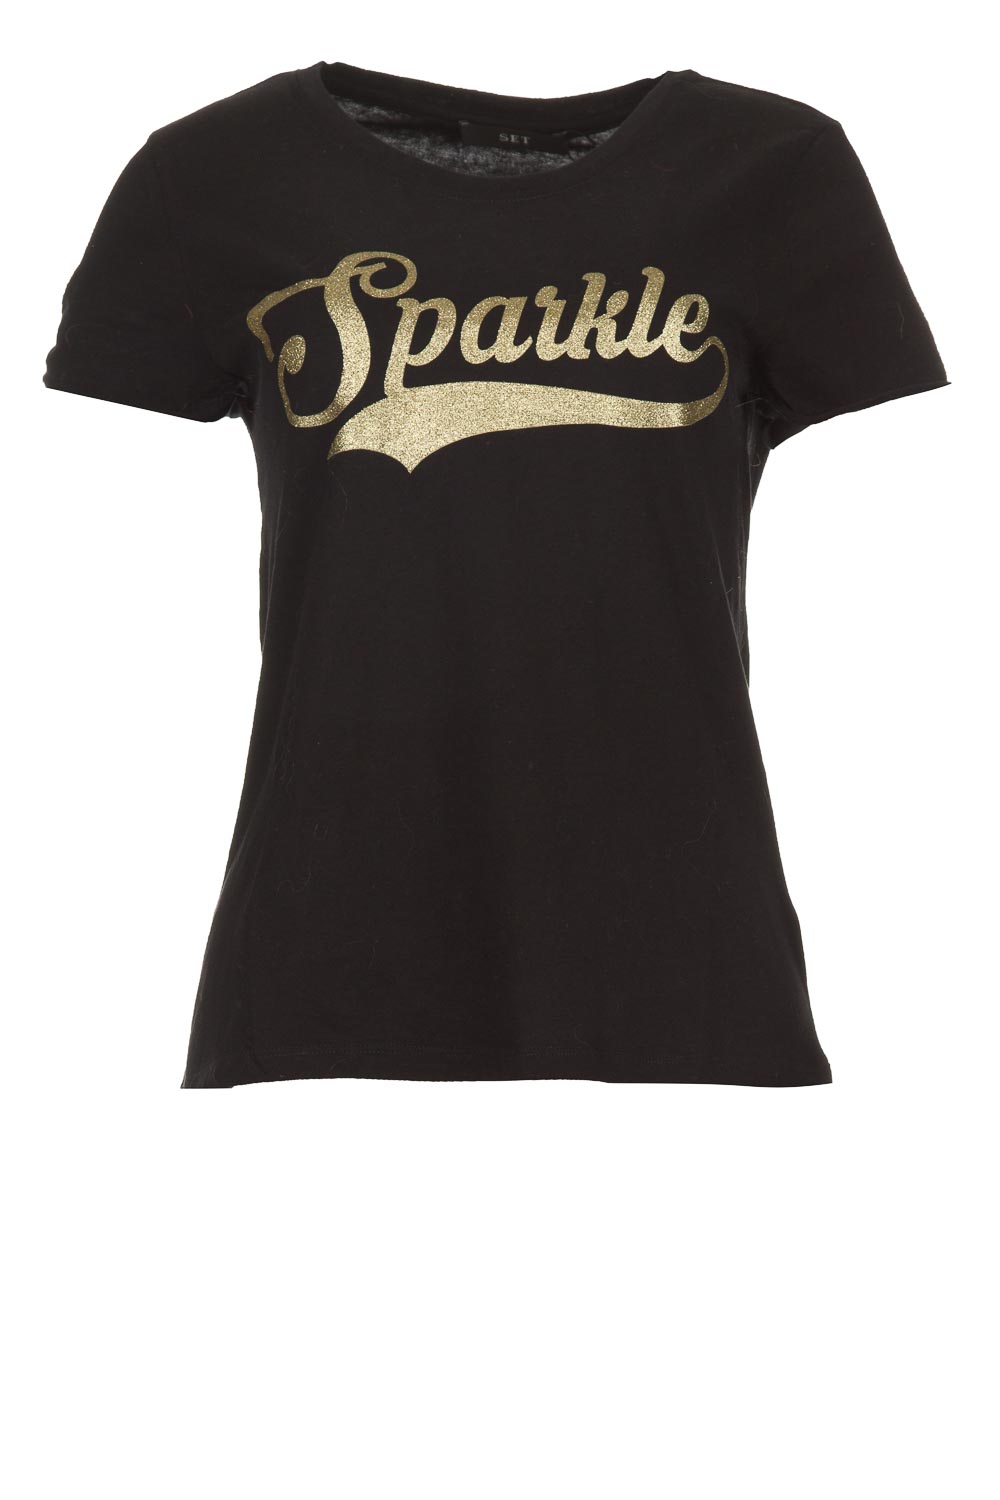 T-shirt with glitter | | Set Little | Soho print Sparkle black